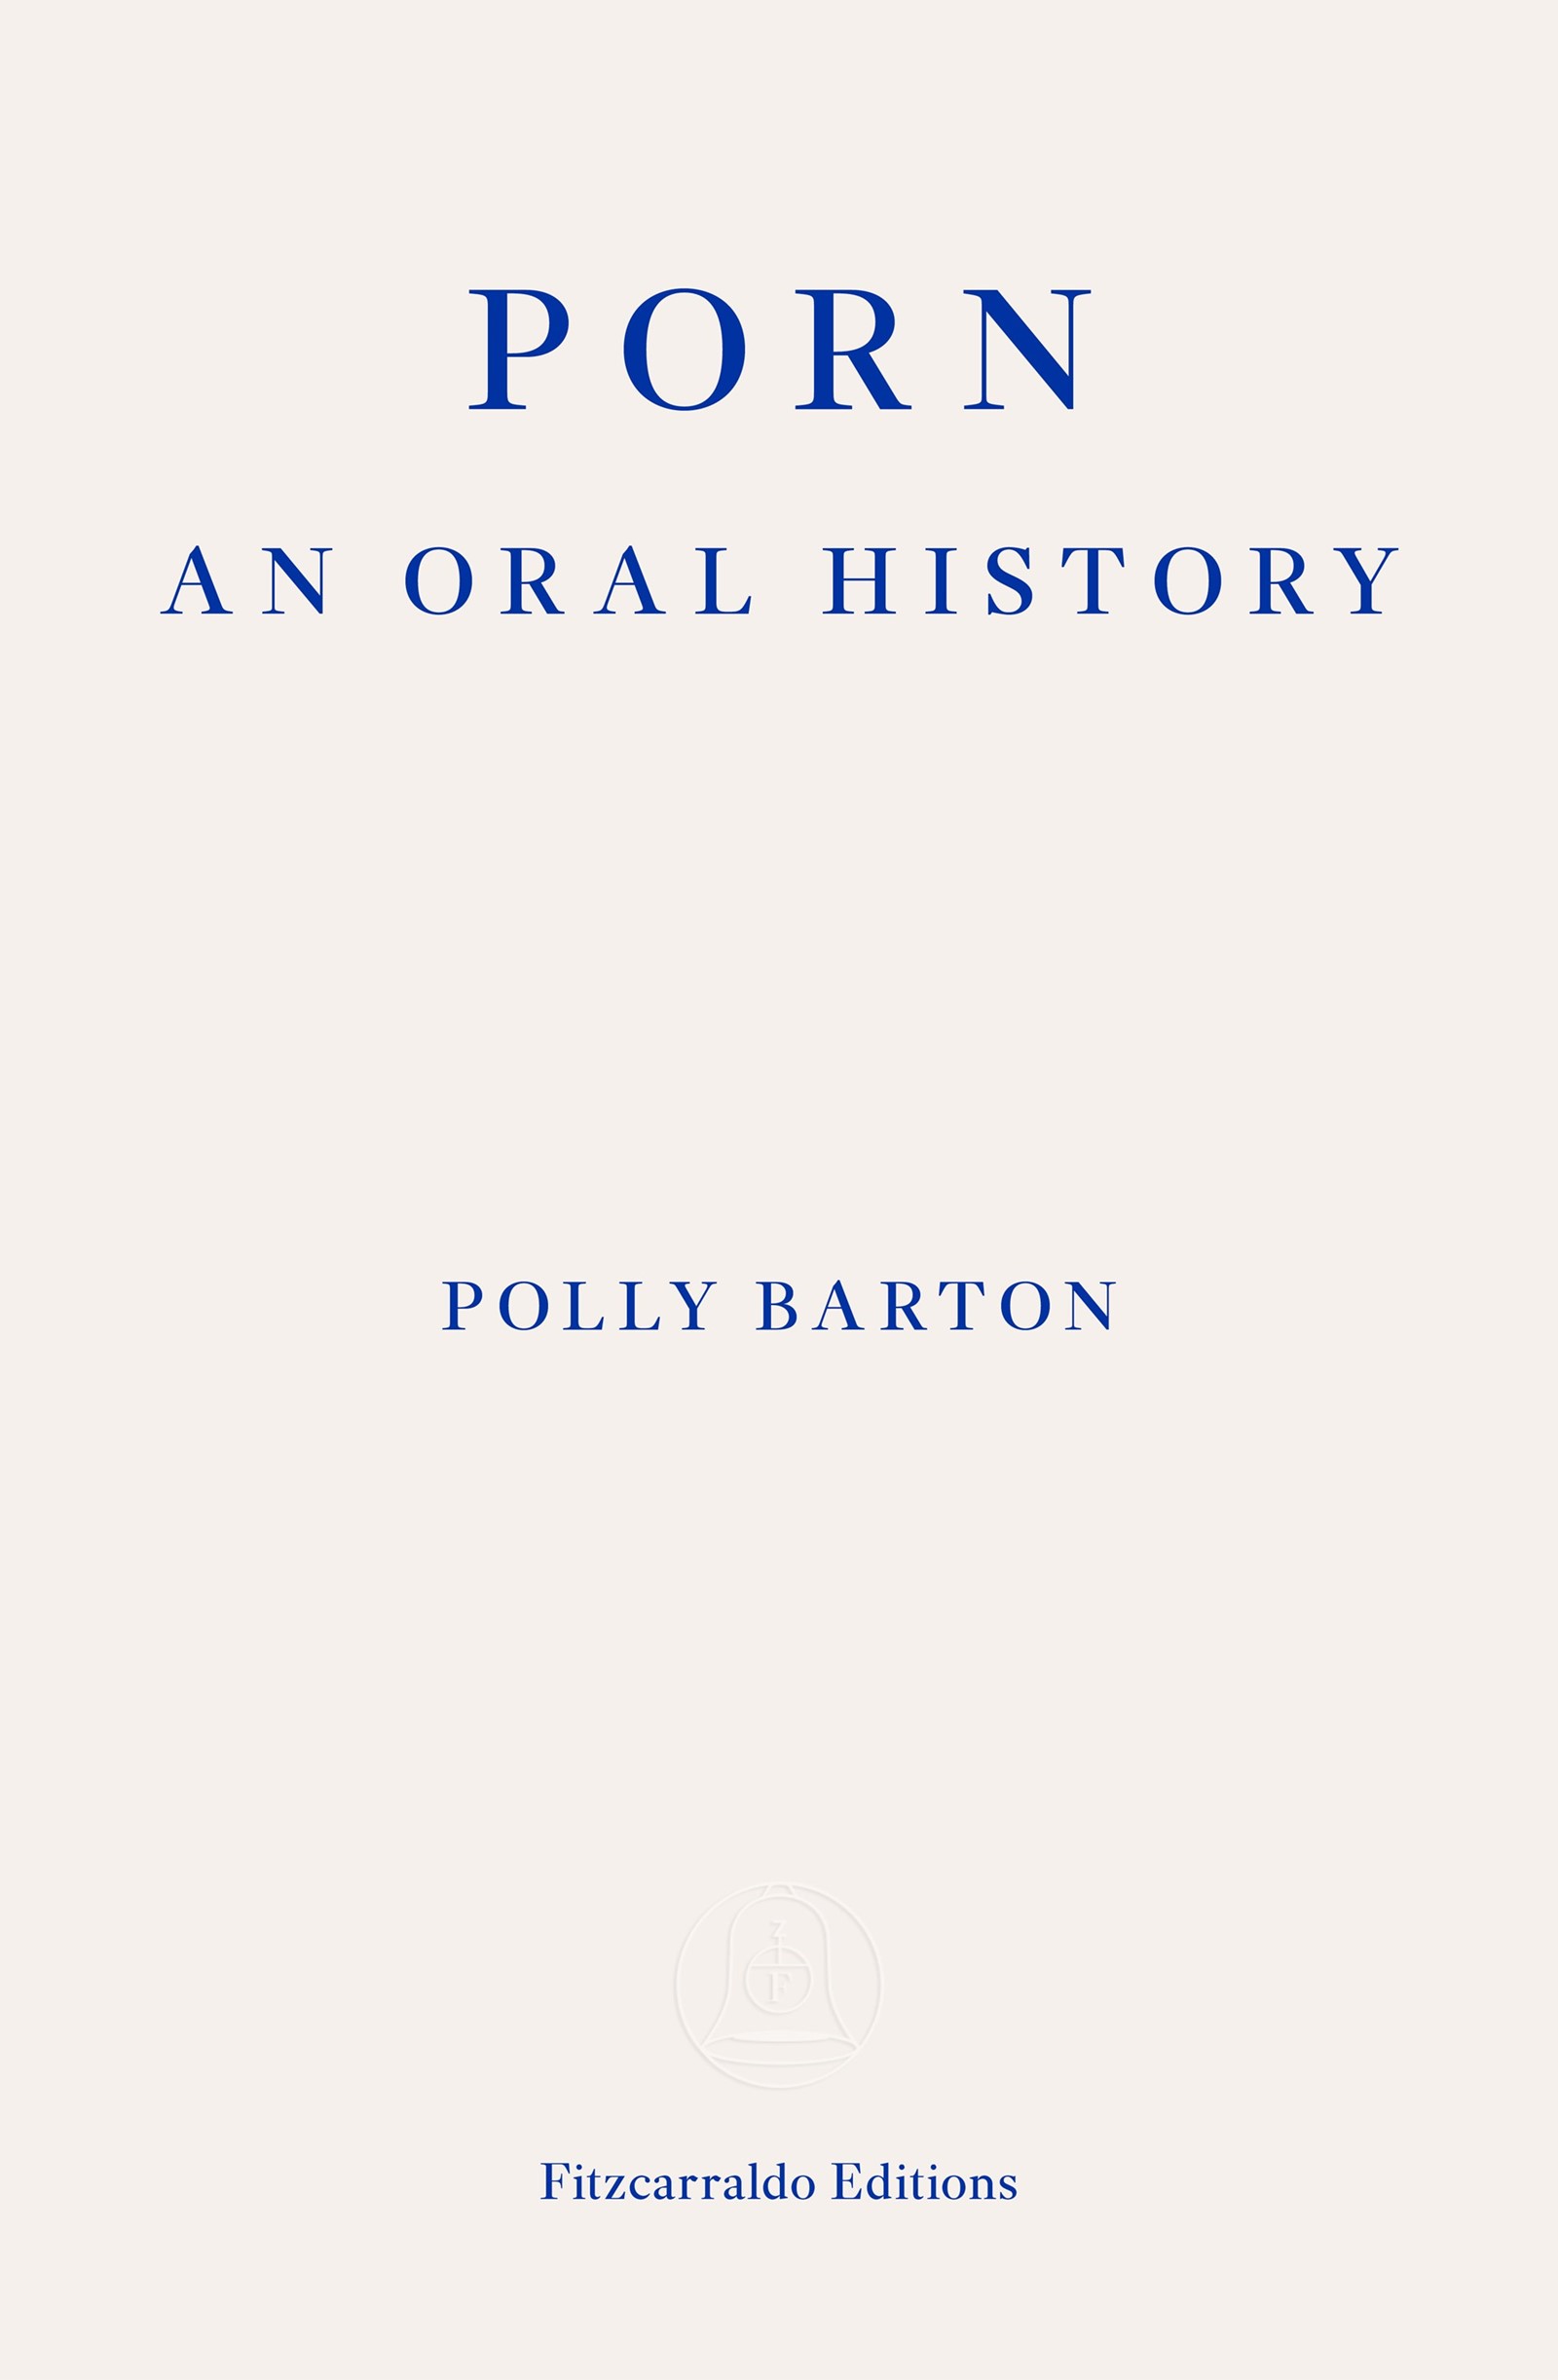 Porn: An Oral History by Polly Barton